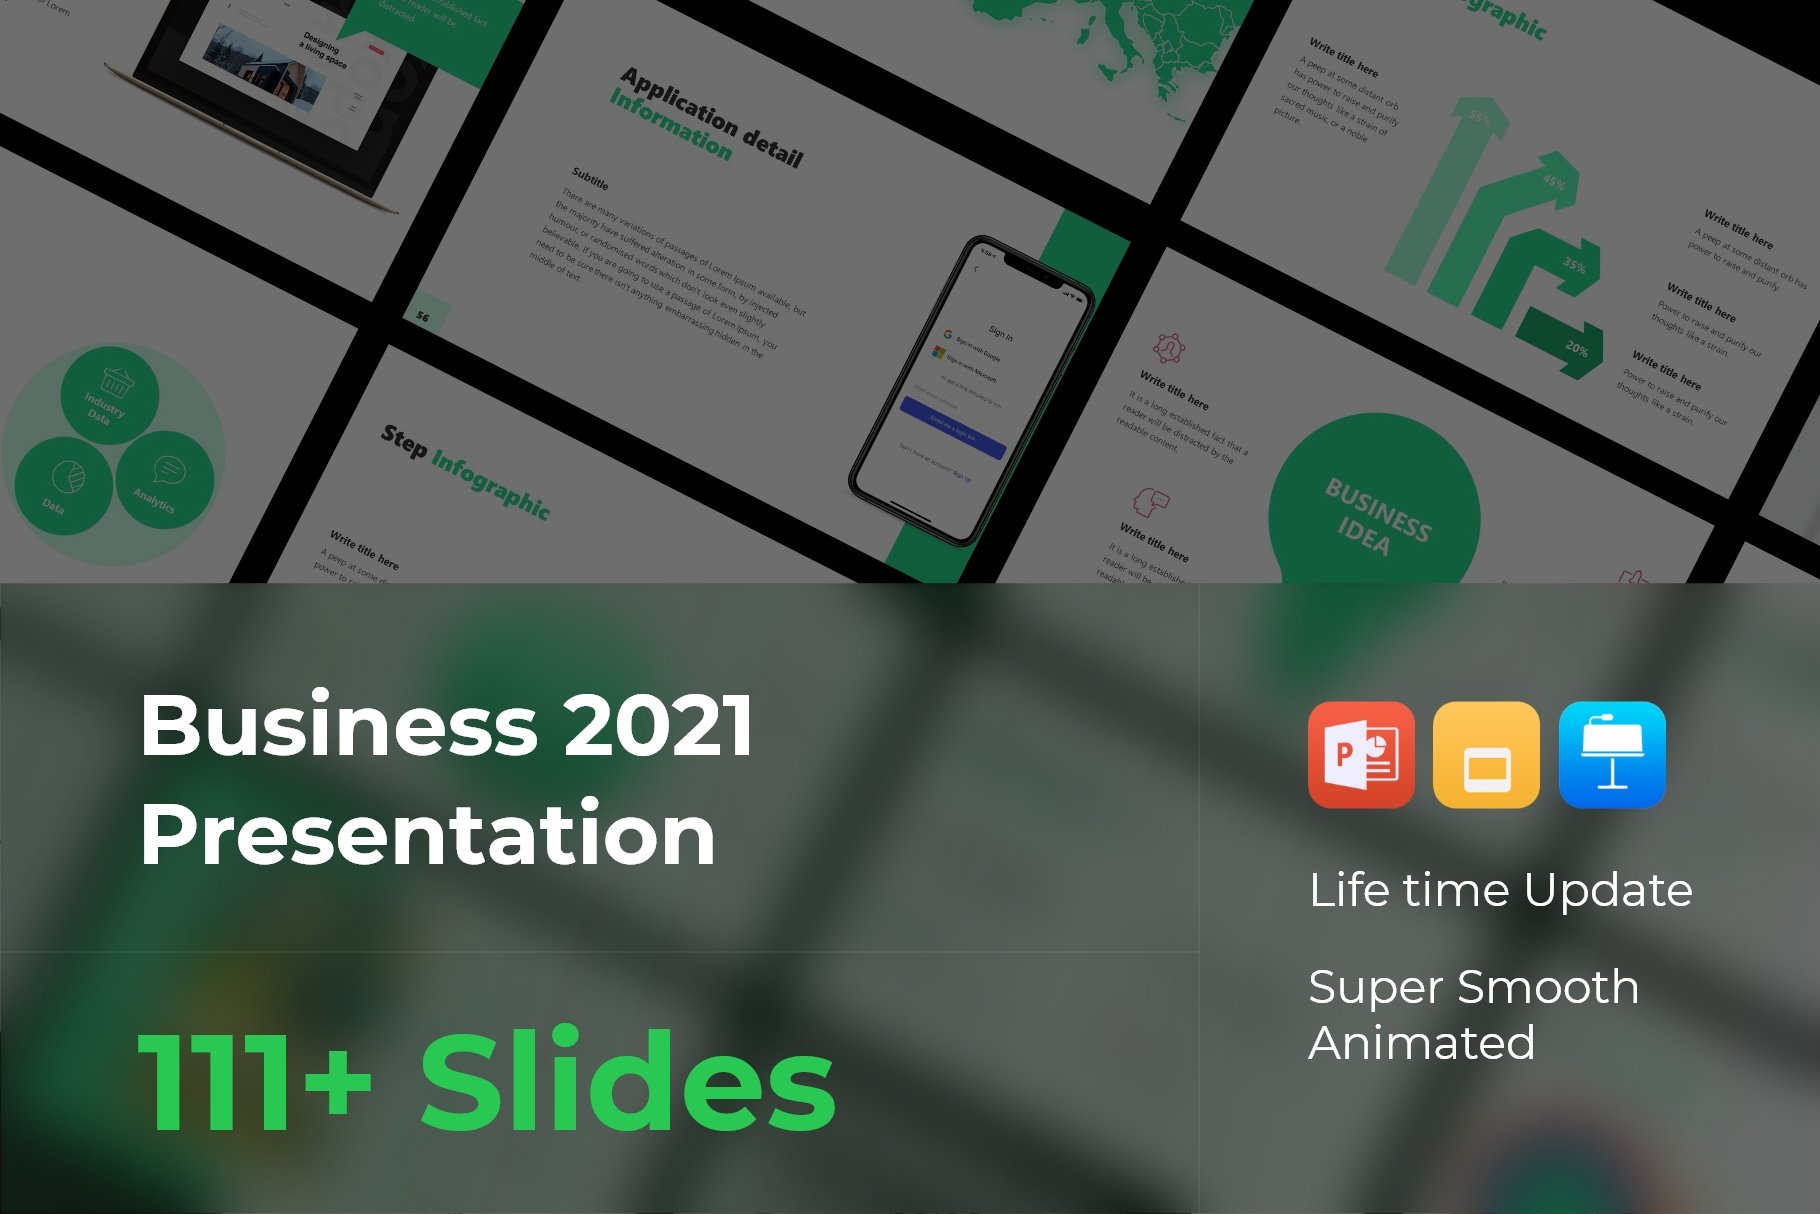 Business 2021 Animated Presentation.